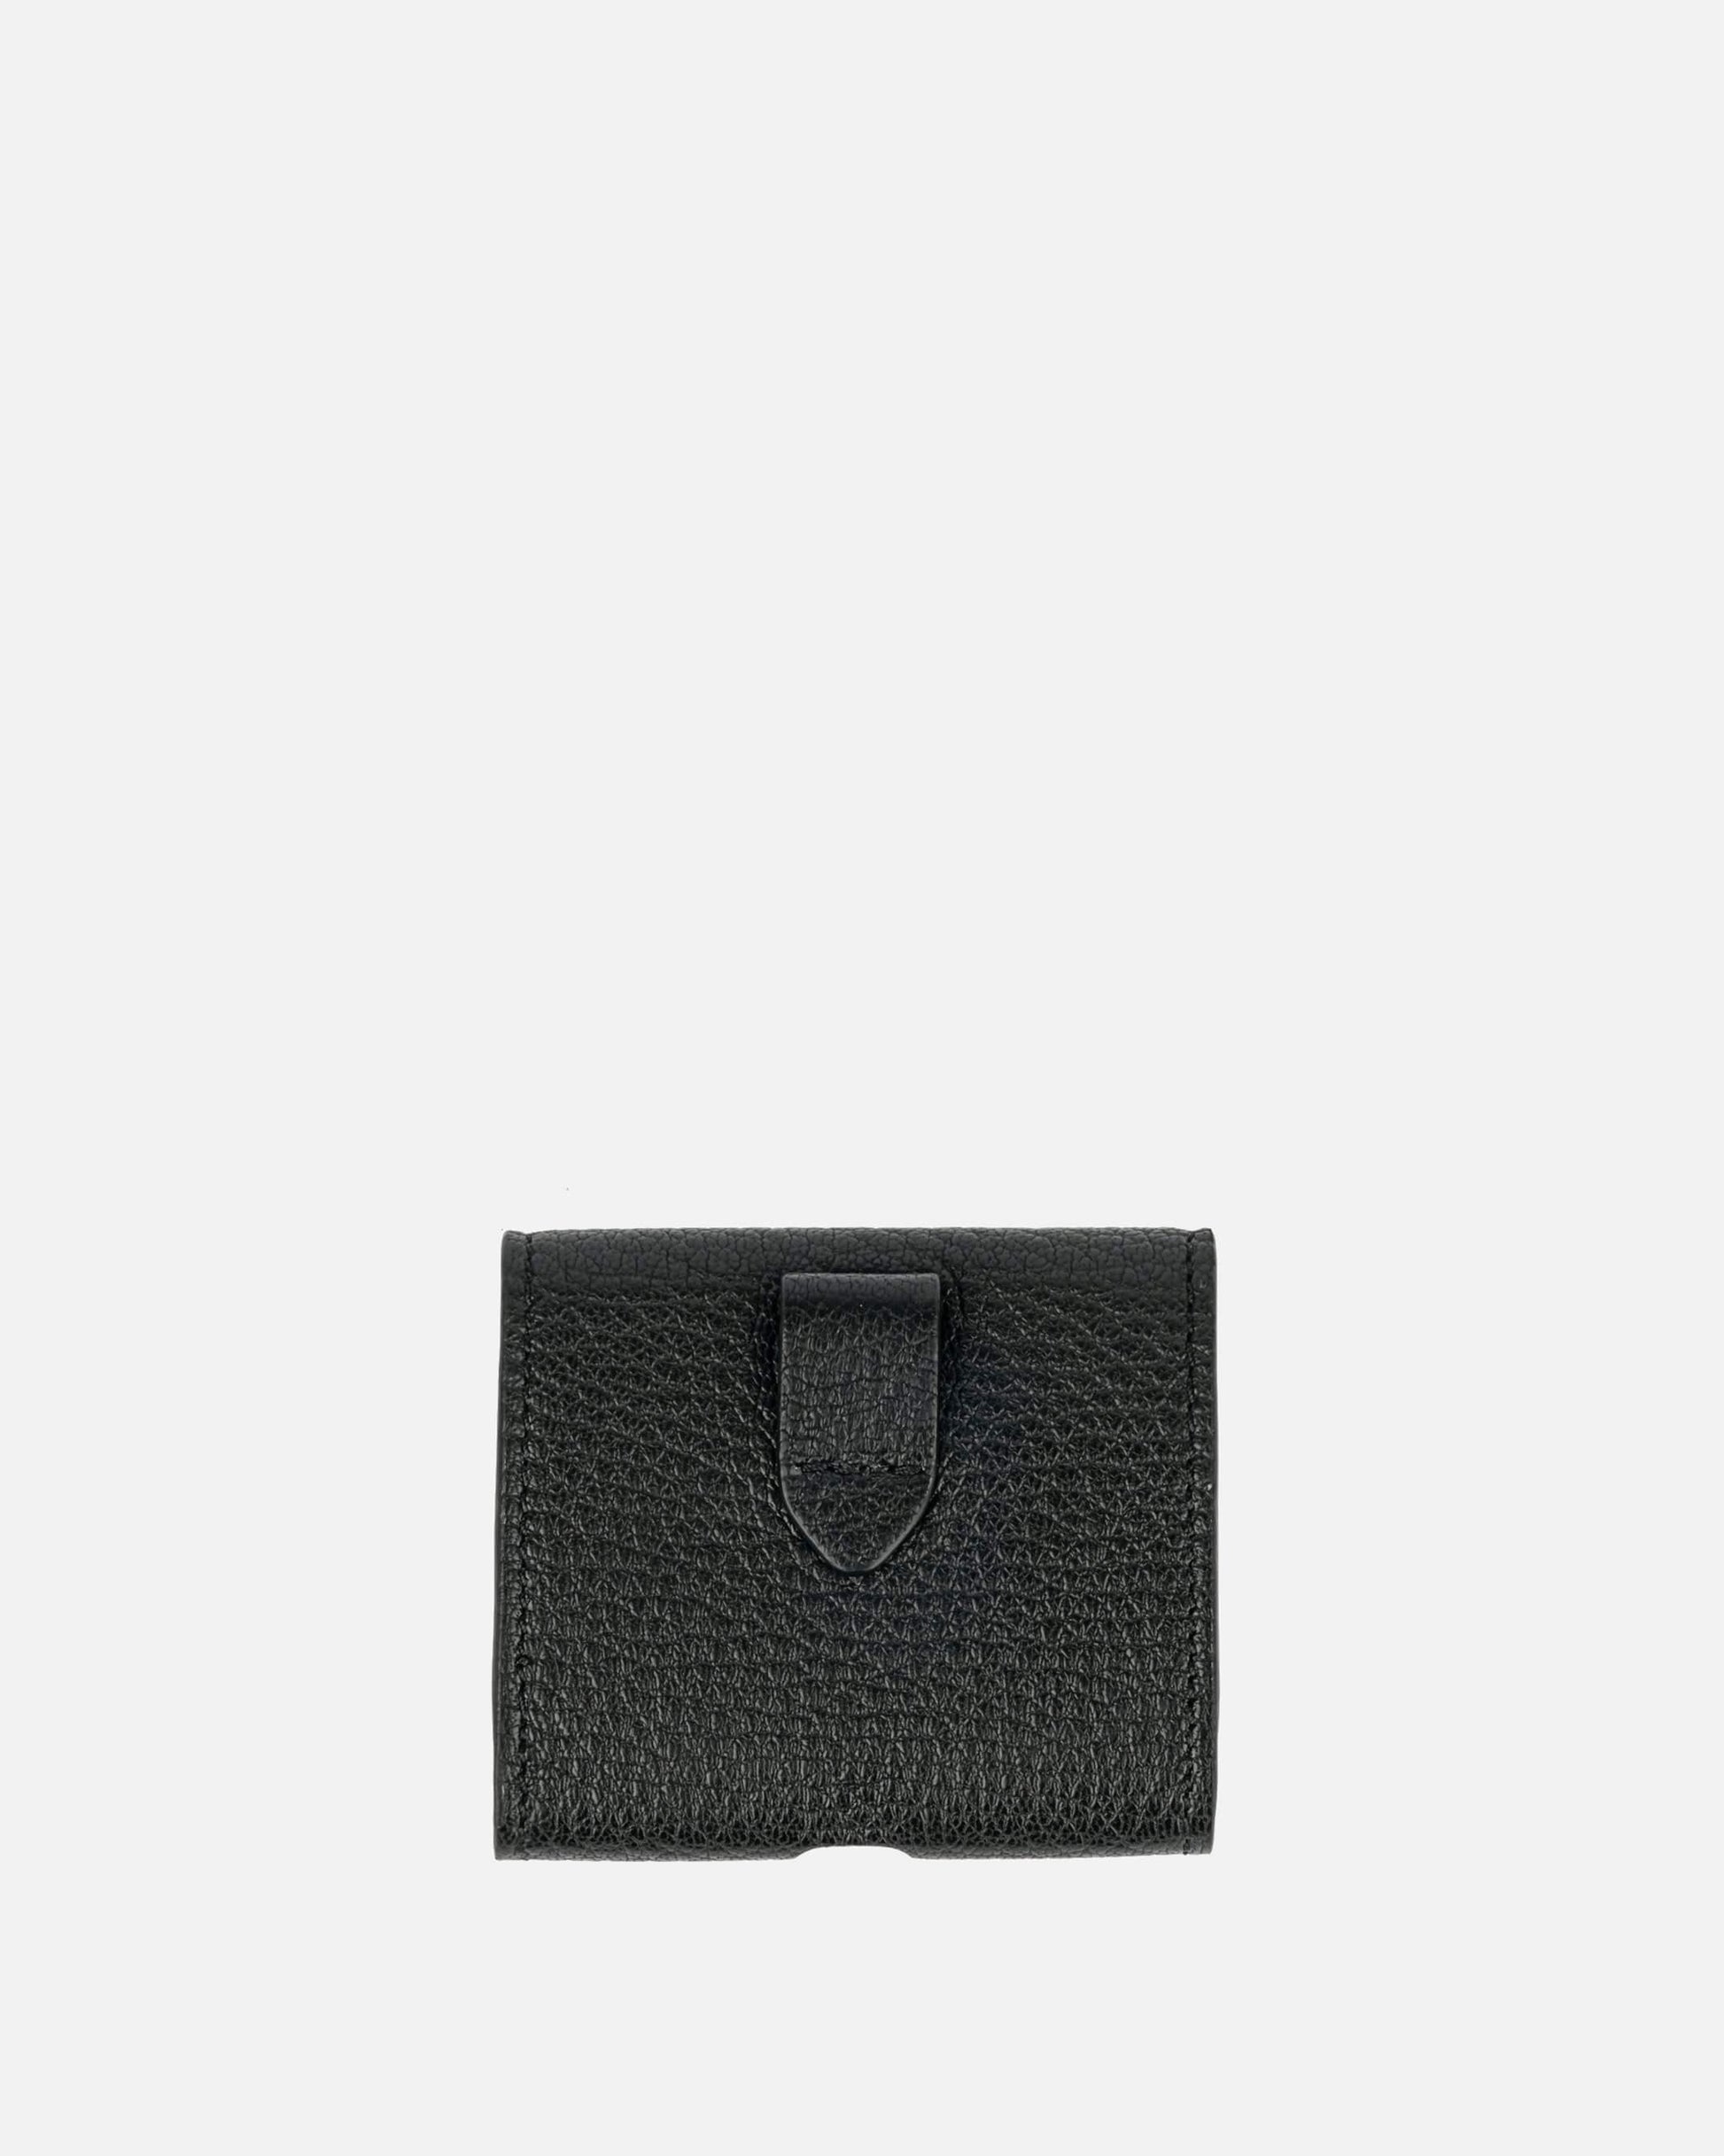 Maison Margiela Leather Goods Airpod Pro Case in Black